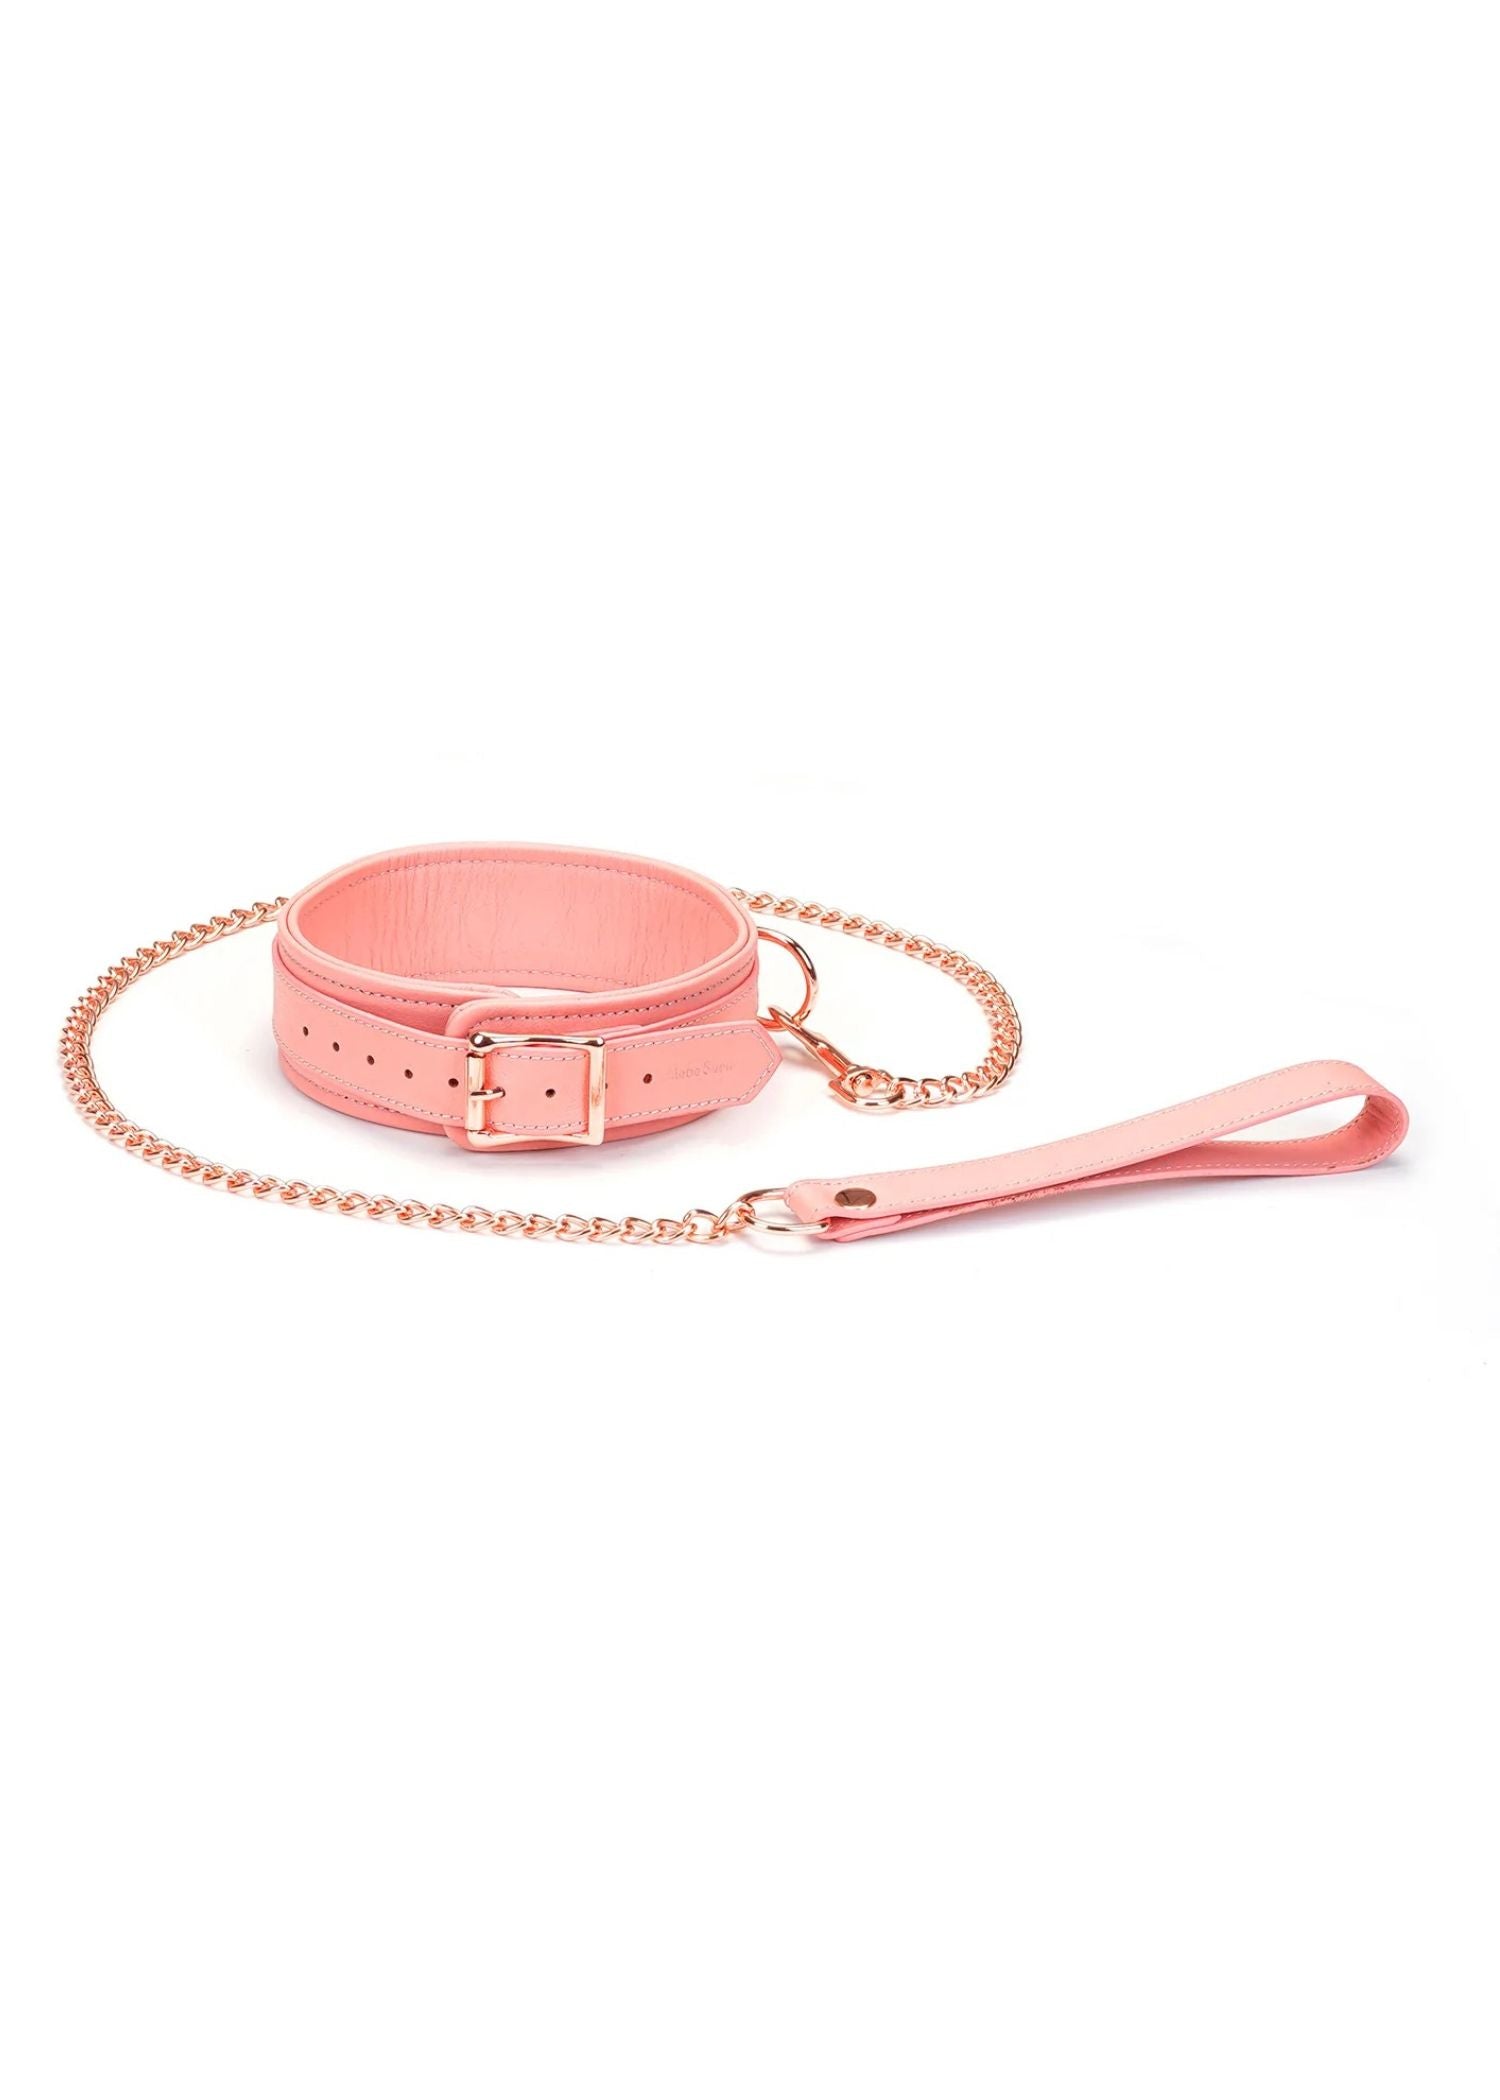 Liebe Seele Pink Dream Collar & Leash | Avec Amour Lingerie